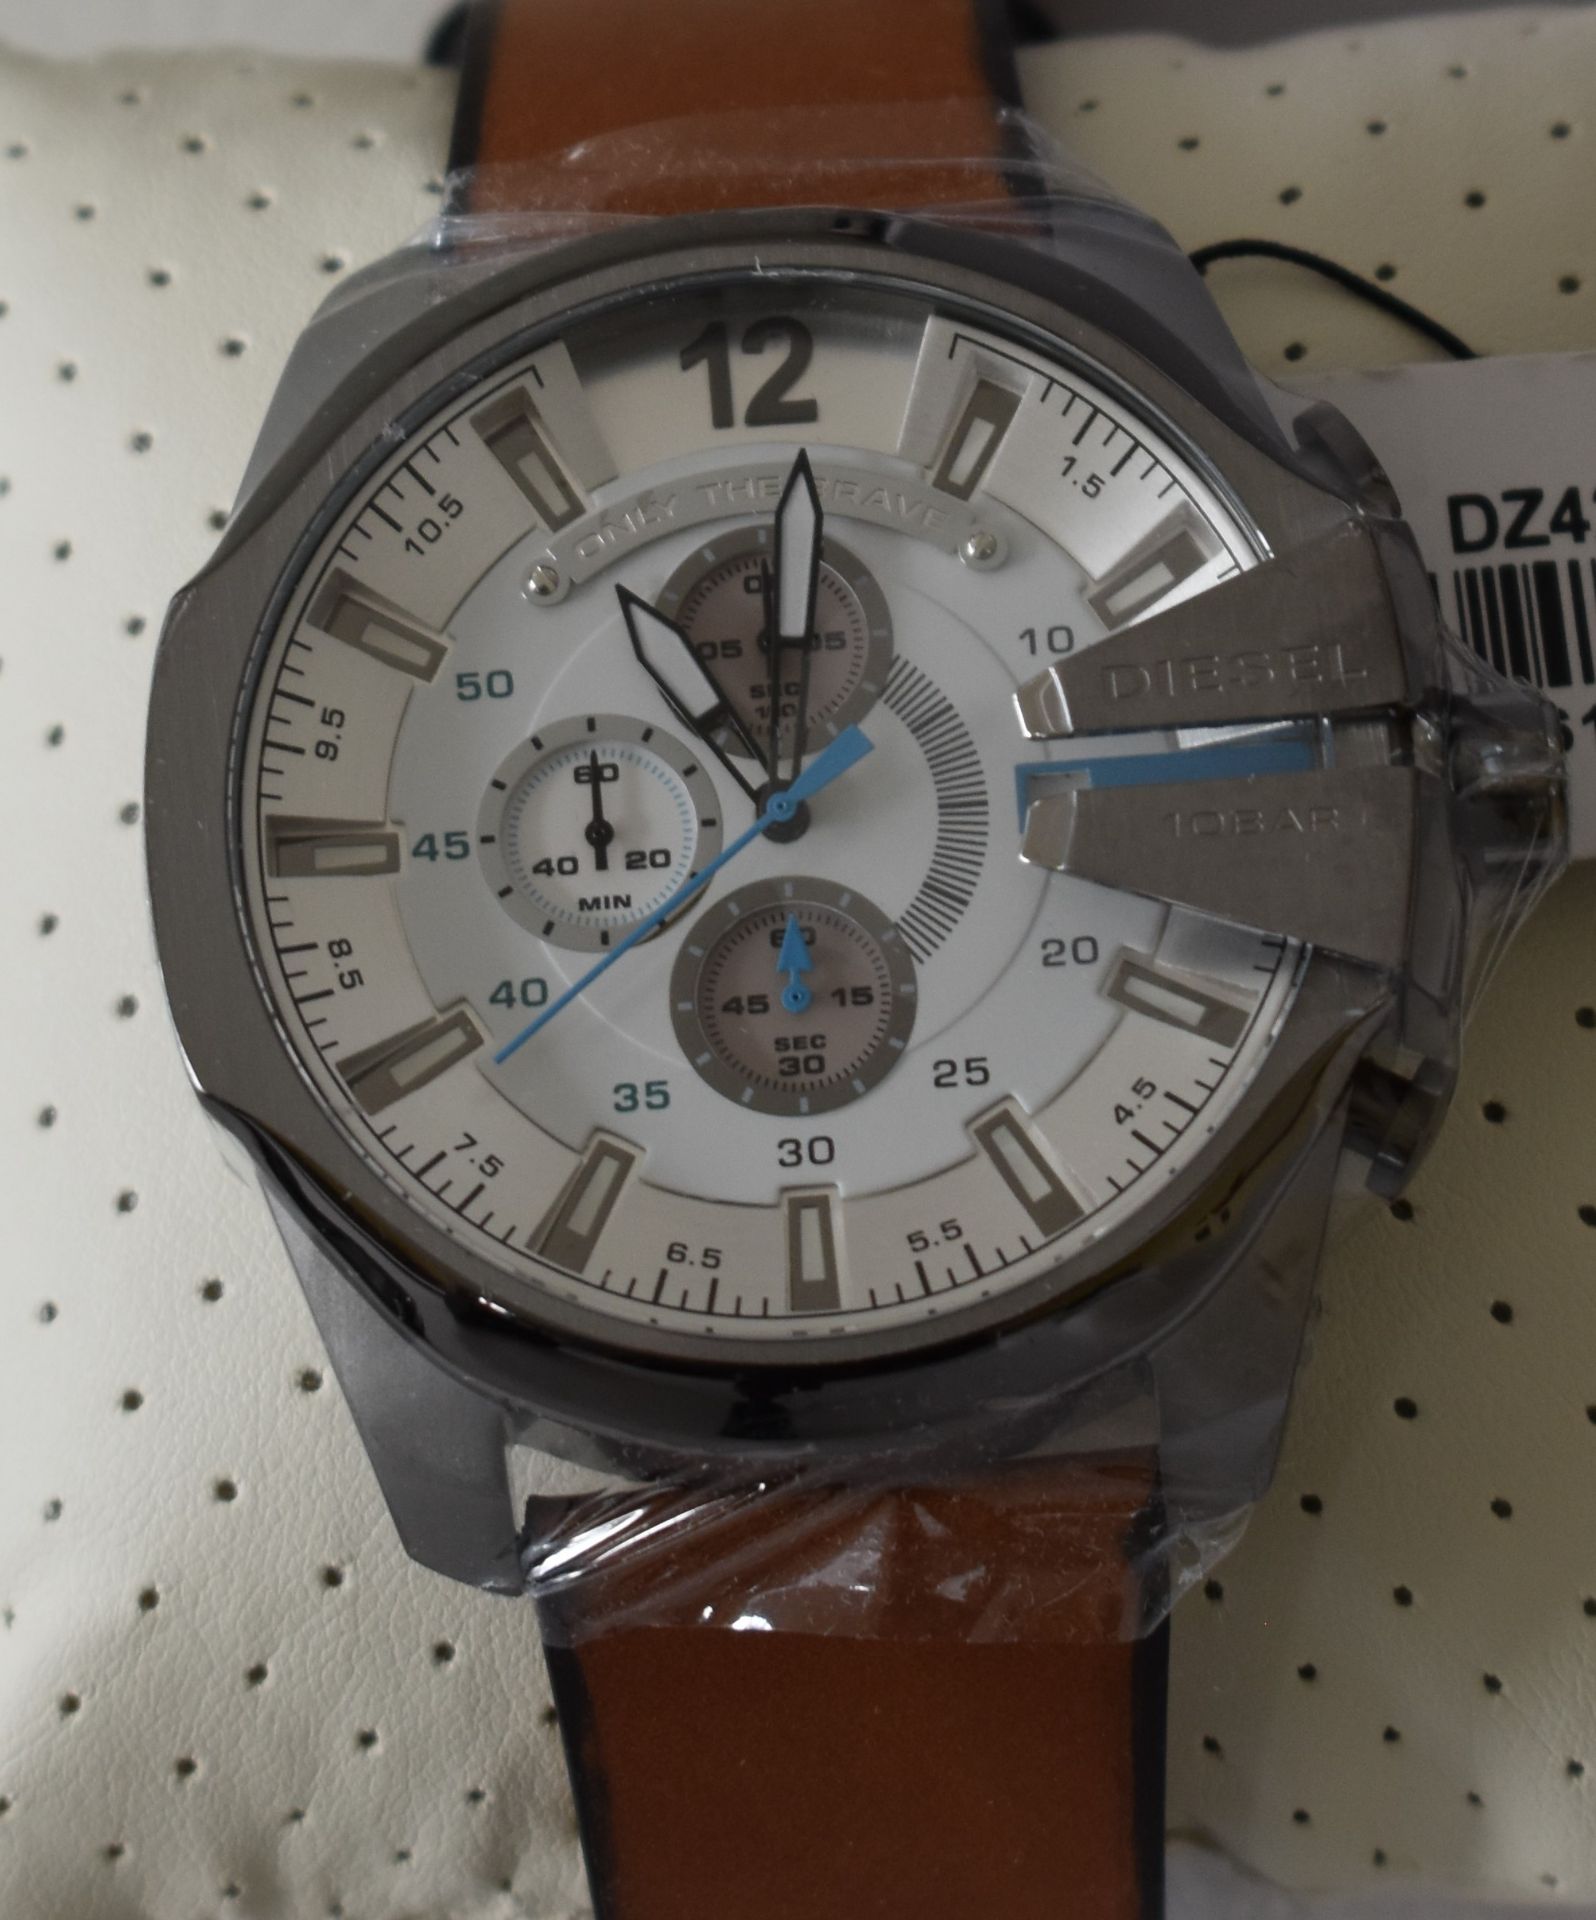 Diesel Men's Watch DZ4280 - Image 2 of 2